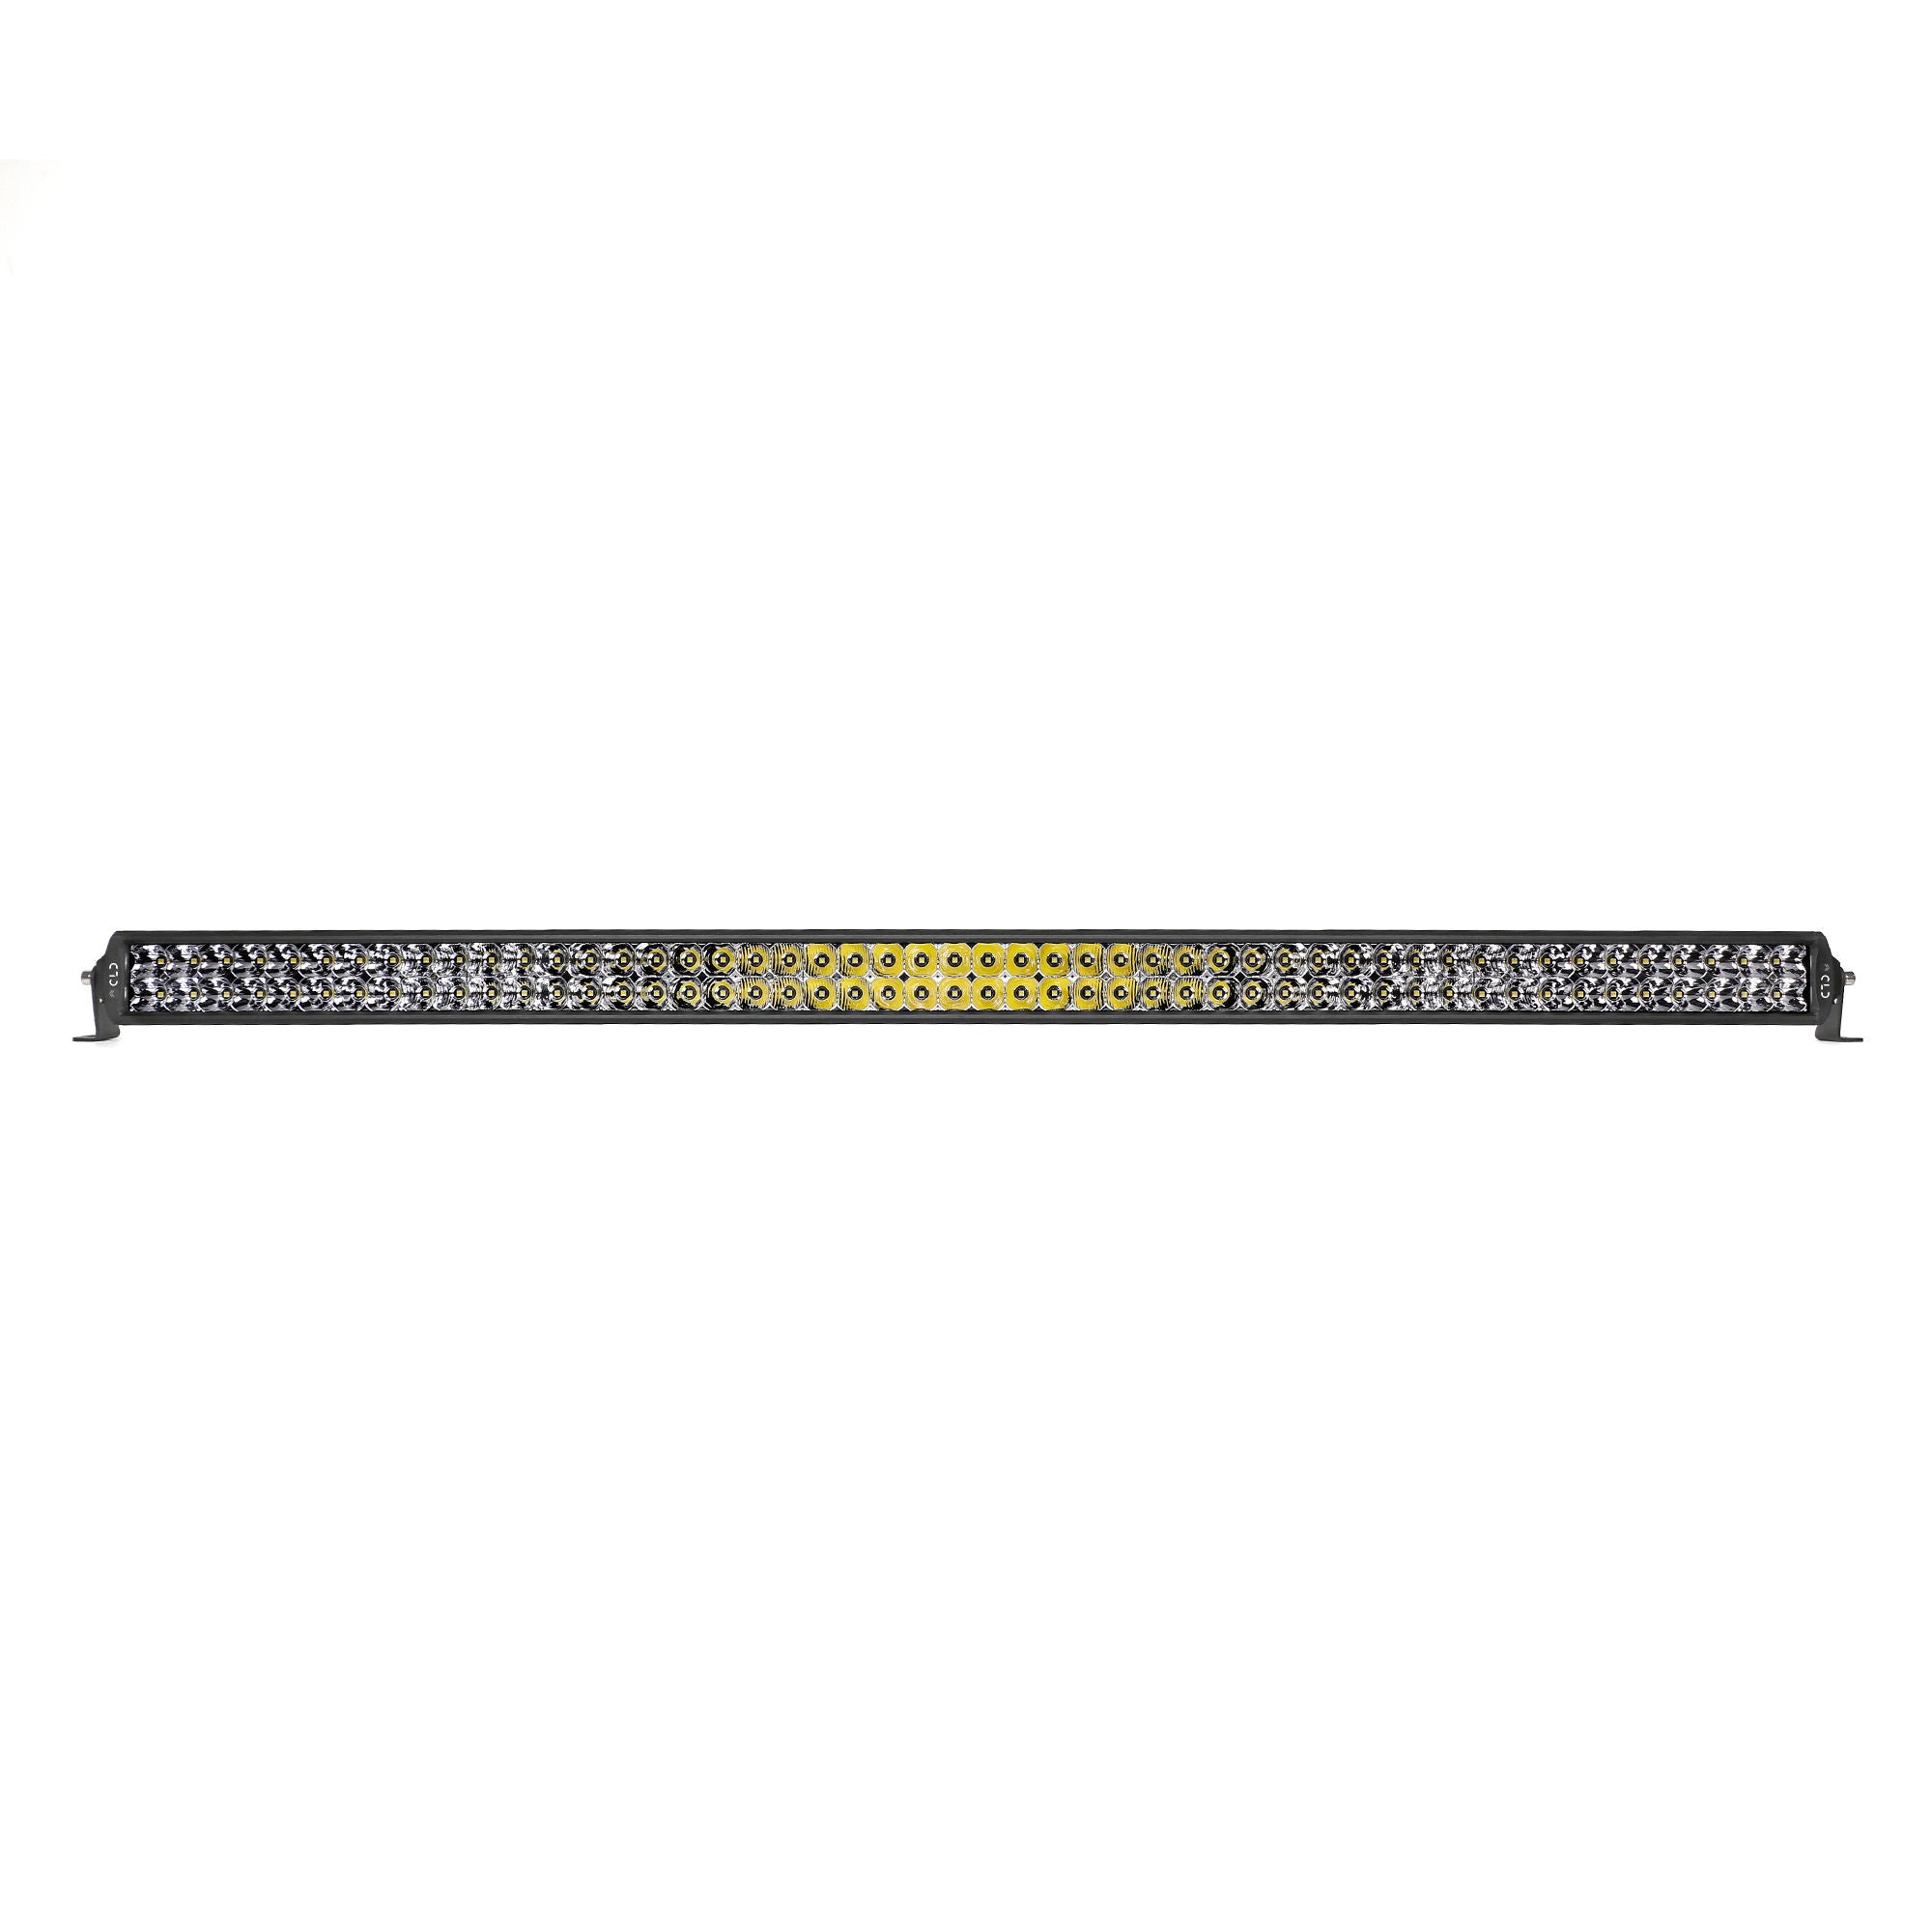 CLD CLDBAR50D - 50" Straight Dual Row Spot/Flood Combo Beam LED Light Bar - 18940 Lumens